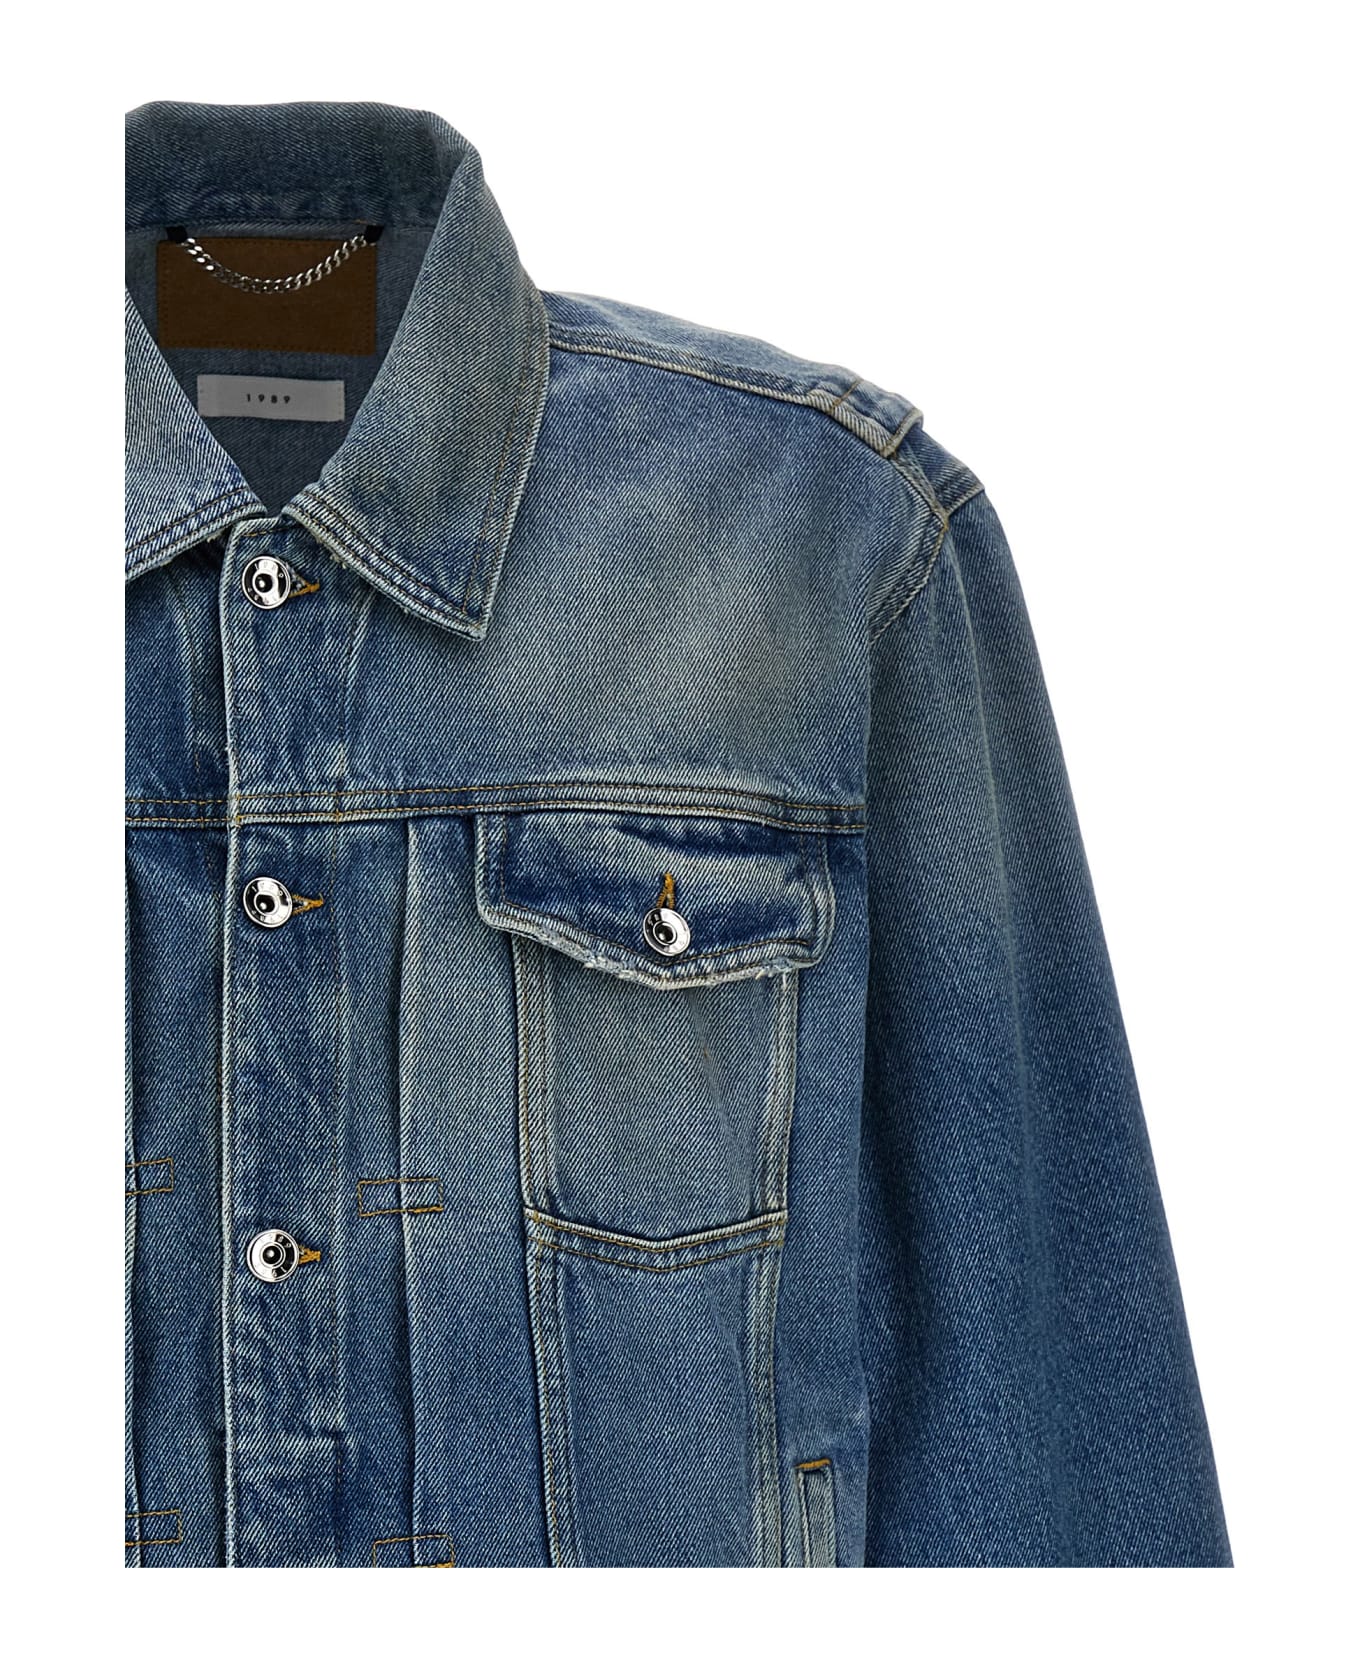 1989 Studio '50s Rodeo' Denim Jacket - Blue ジャケット